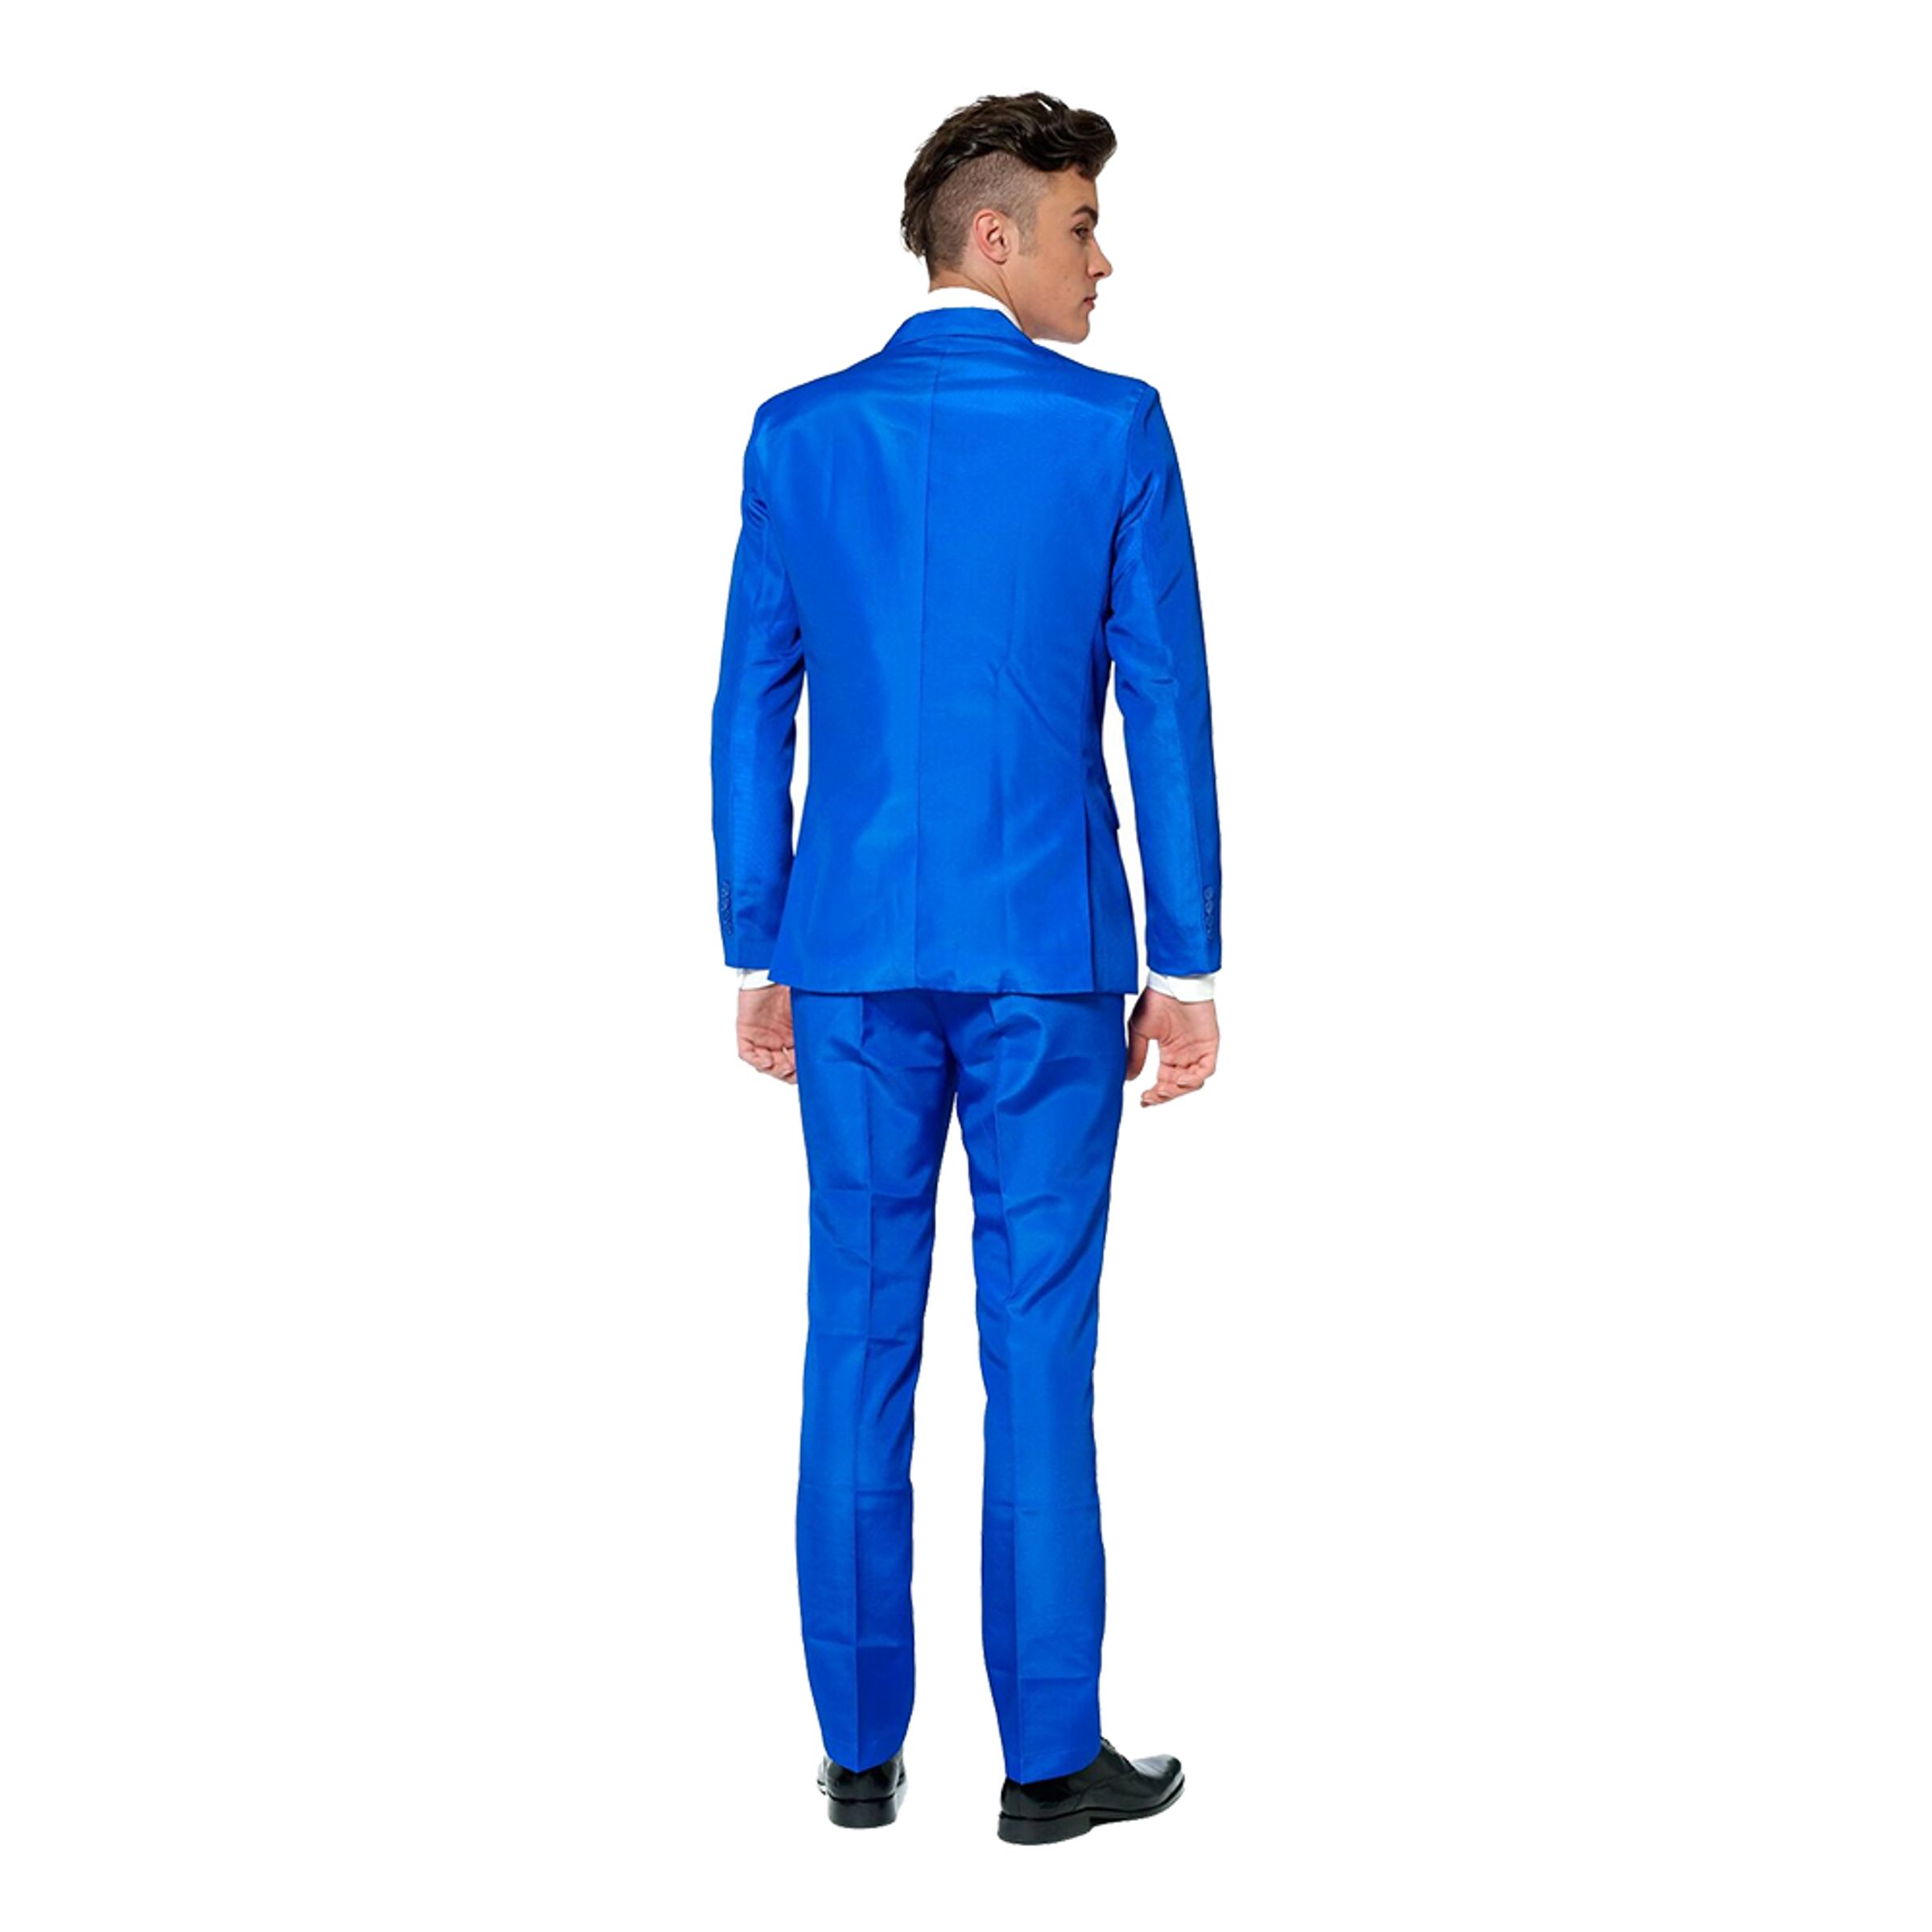 Suitmeister Blå Kostym - Small